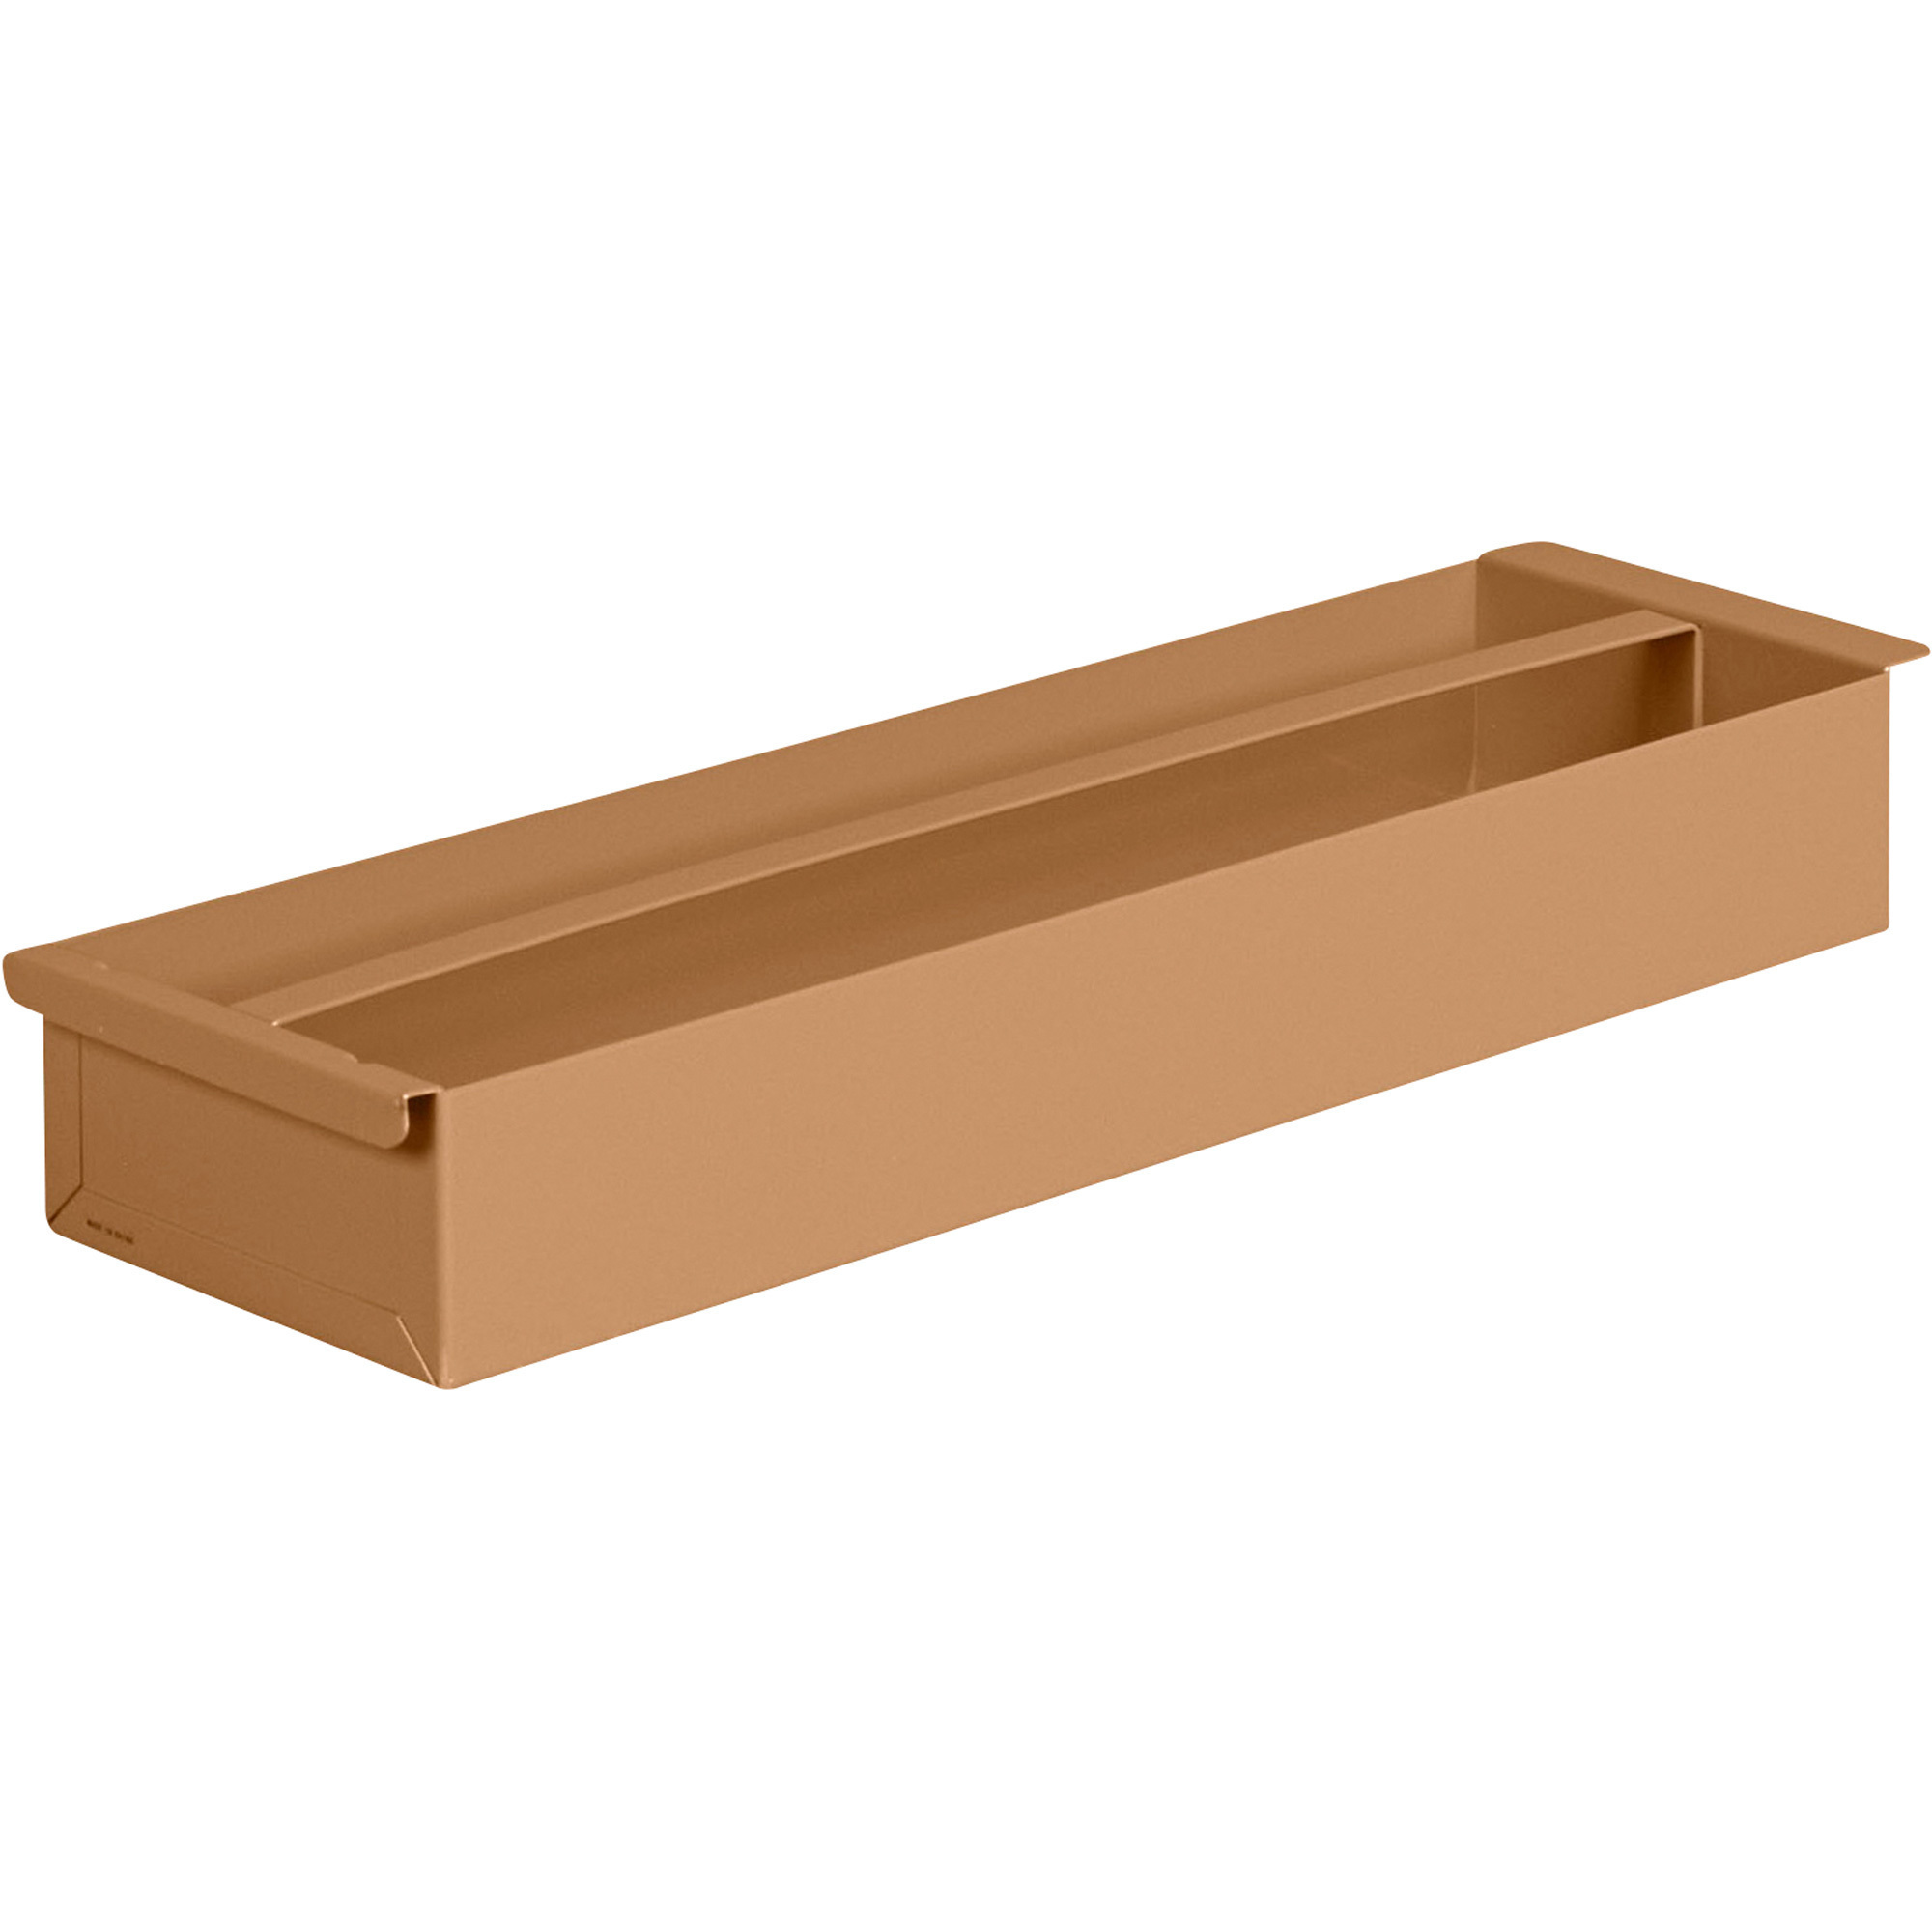 Knaack Tool Tray, 8Inch W x 27 5/8Inch D x 4Inch H, Fits Jobmaster Tool Storage Box, Model 31